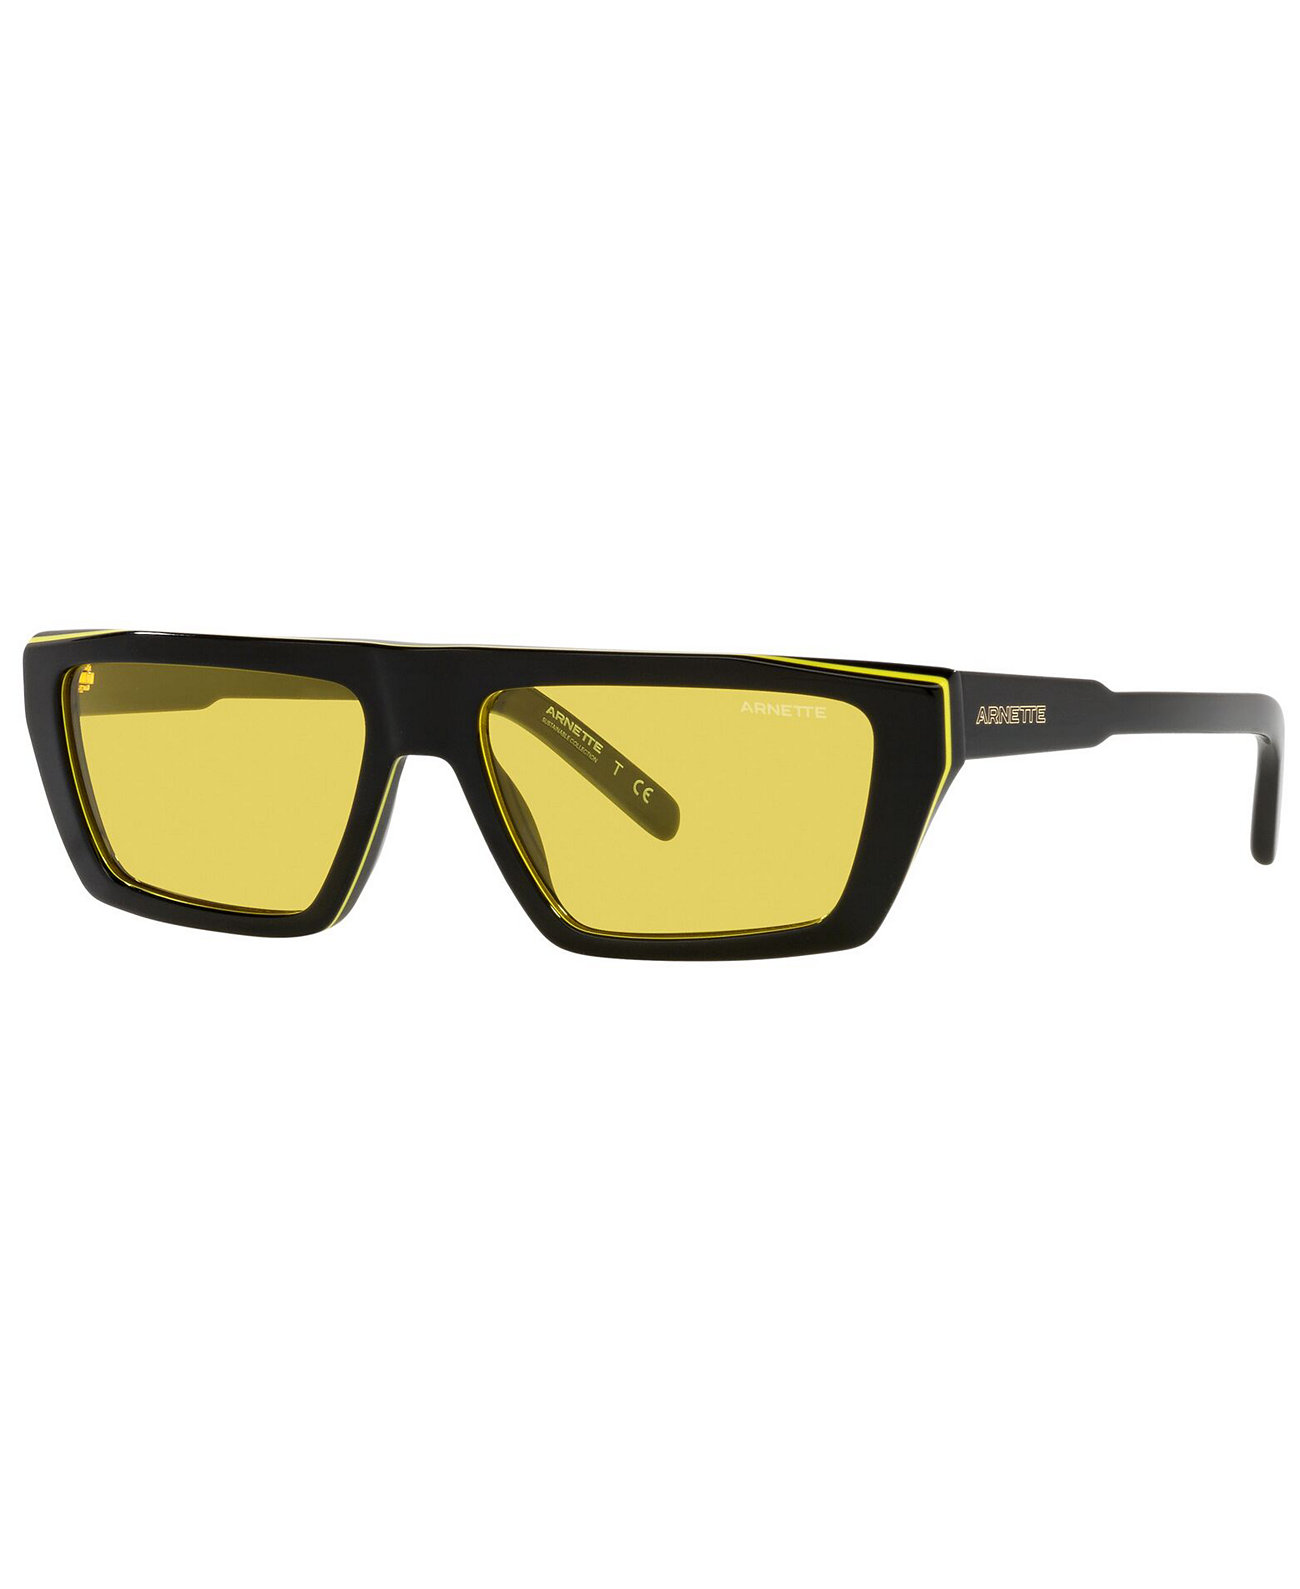 Мужские солнцезащитные очки, AN4281 56 Arnette